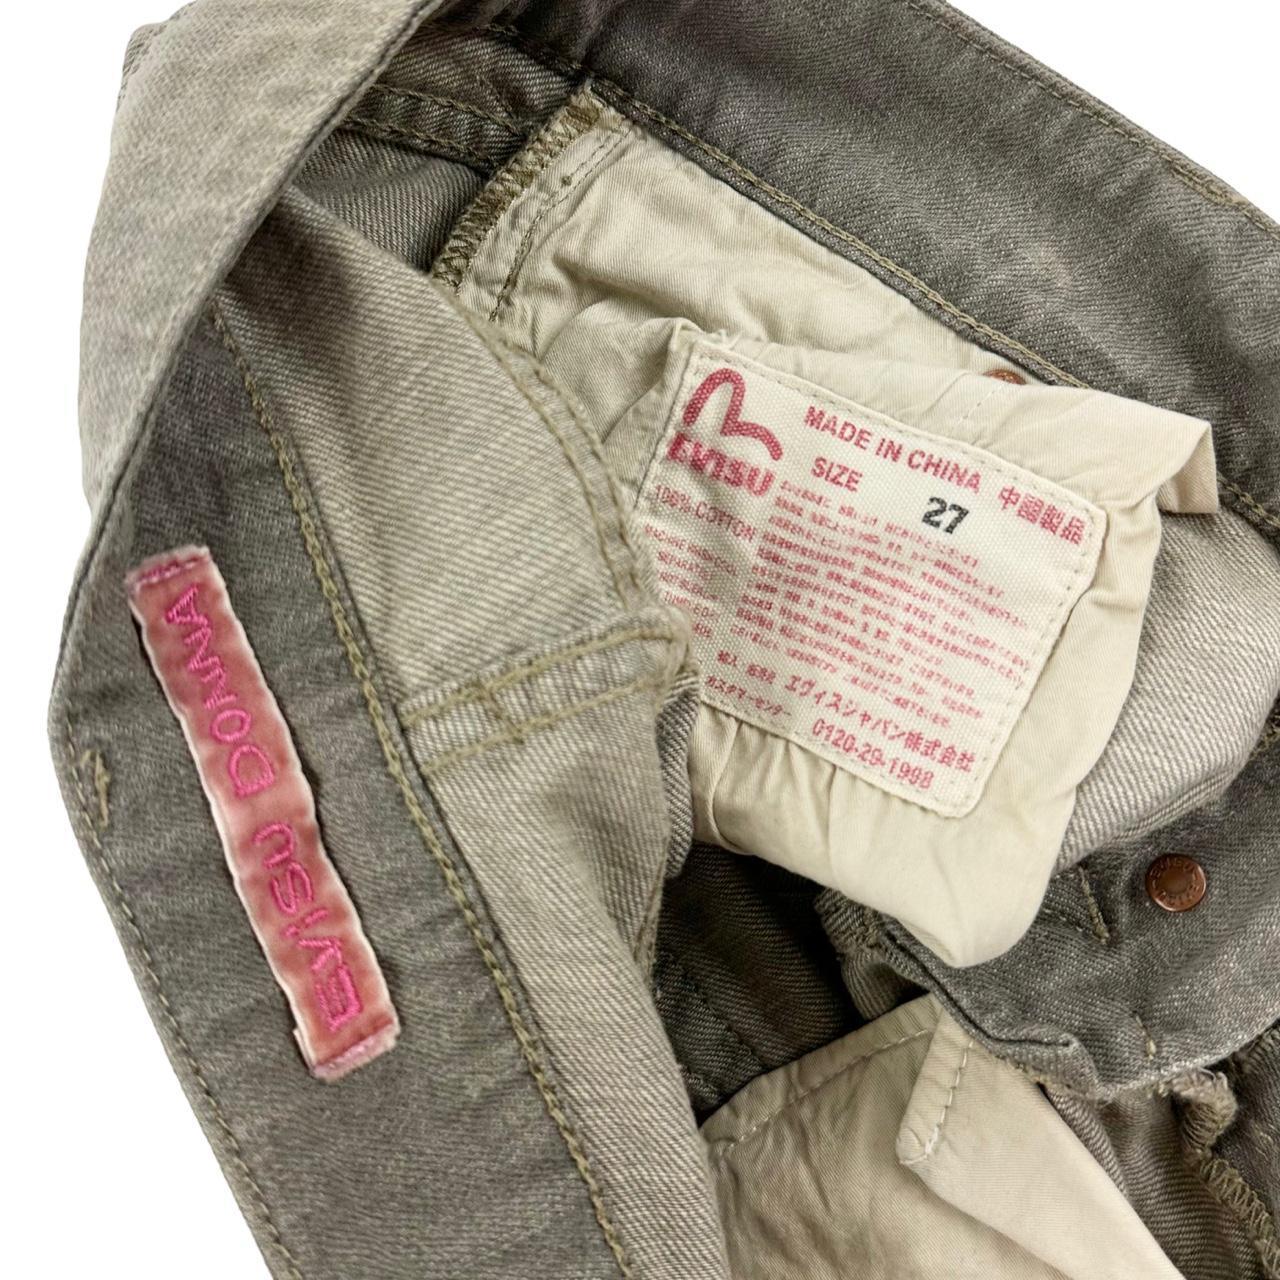 Vintage Evisu Heart Jeans Trousers W29 - Known Source